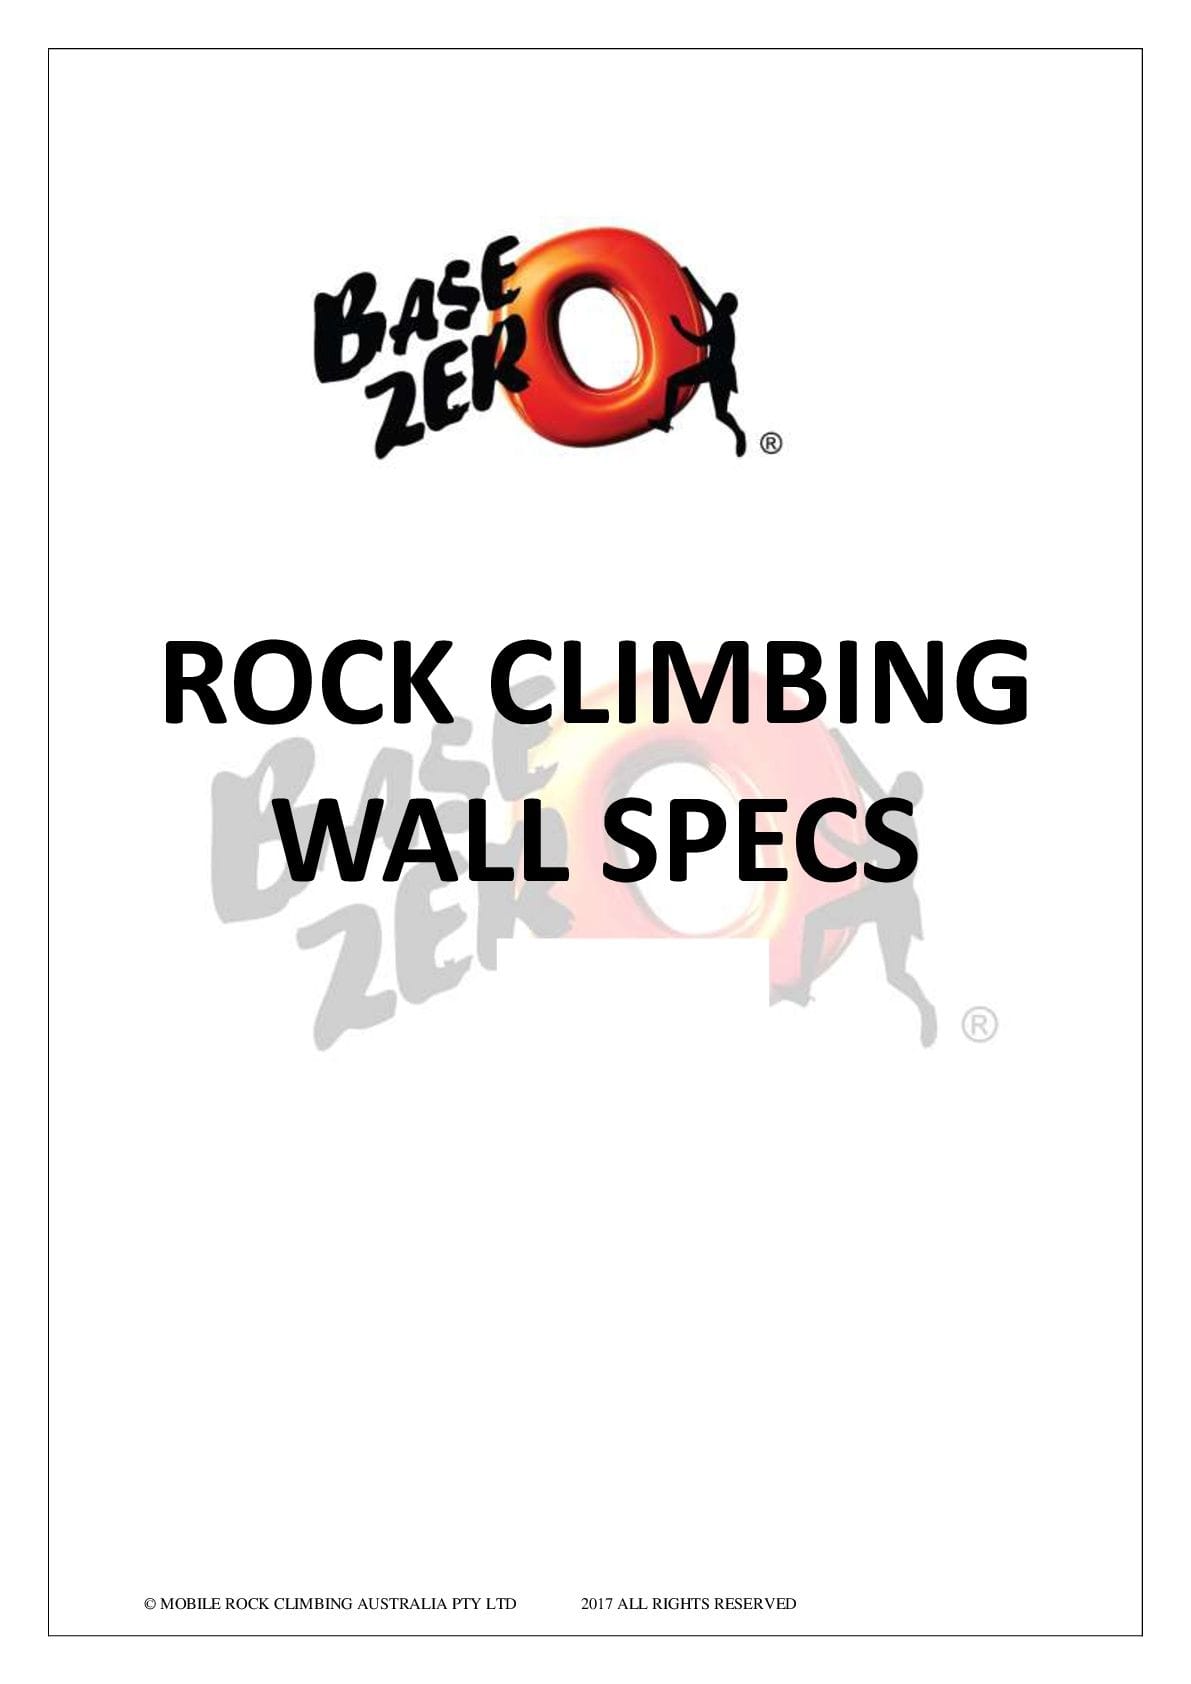 ROCK CLIMBING WALL SPECS